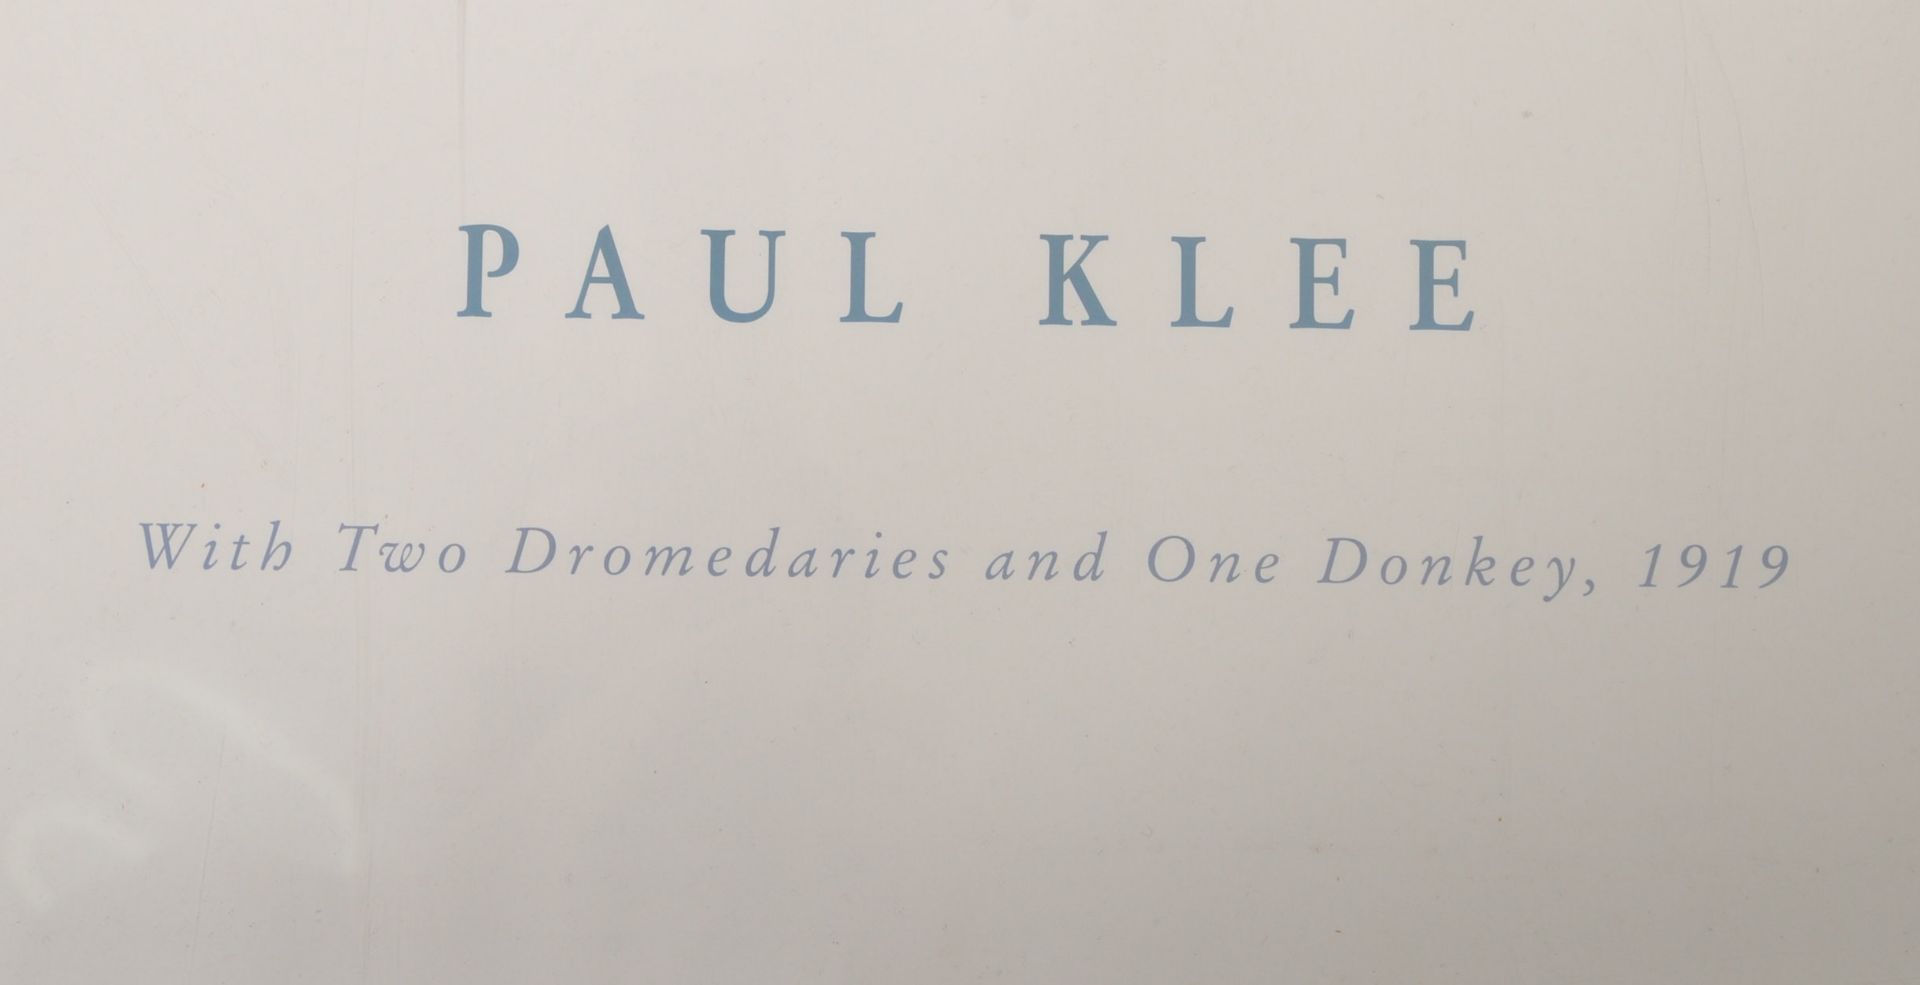 PAUL KLEE - 20TH CENTURY MUSEUM ART POSTER PRINT - Image 2 of 4